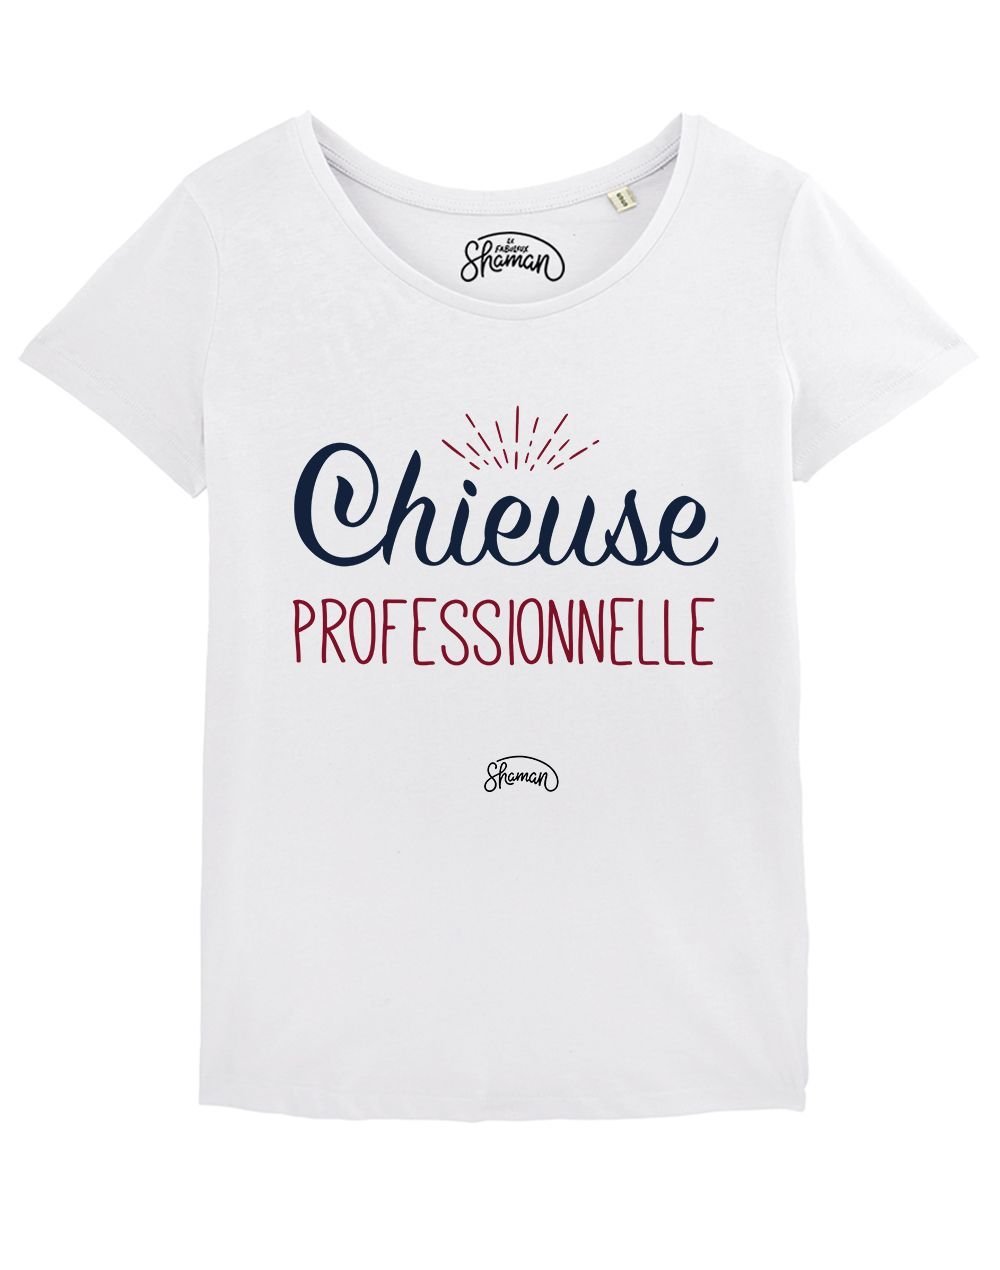 T-shirt "Chieuse professionnelle"